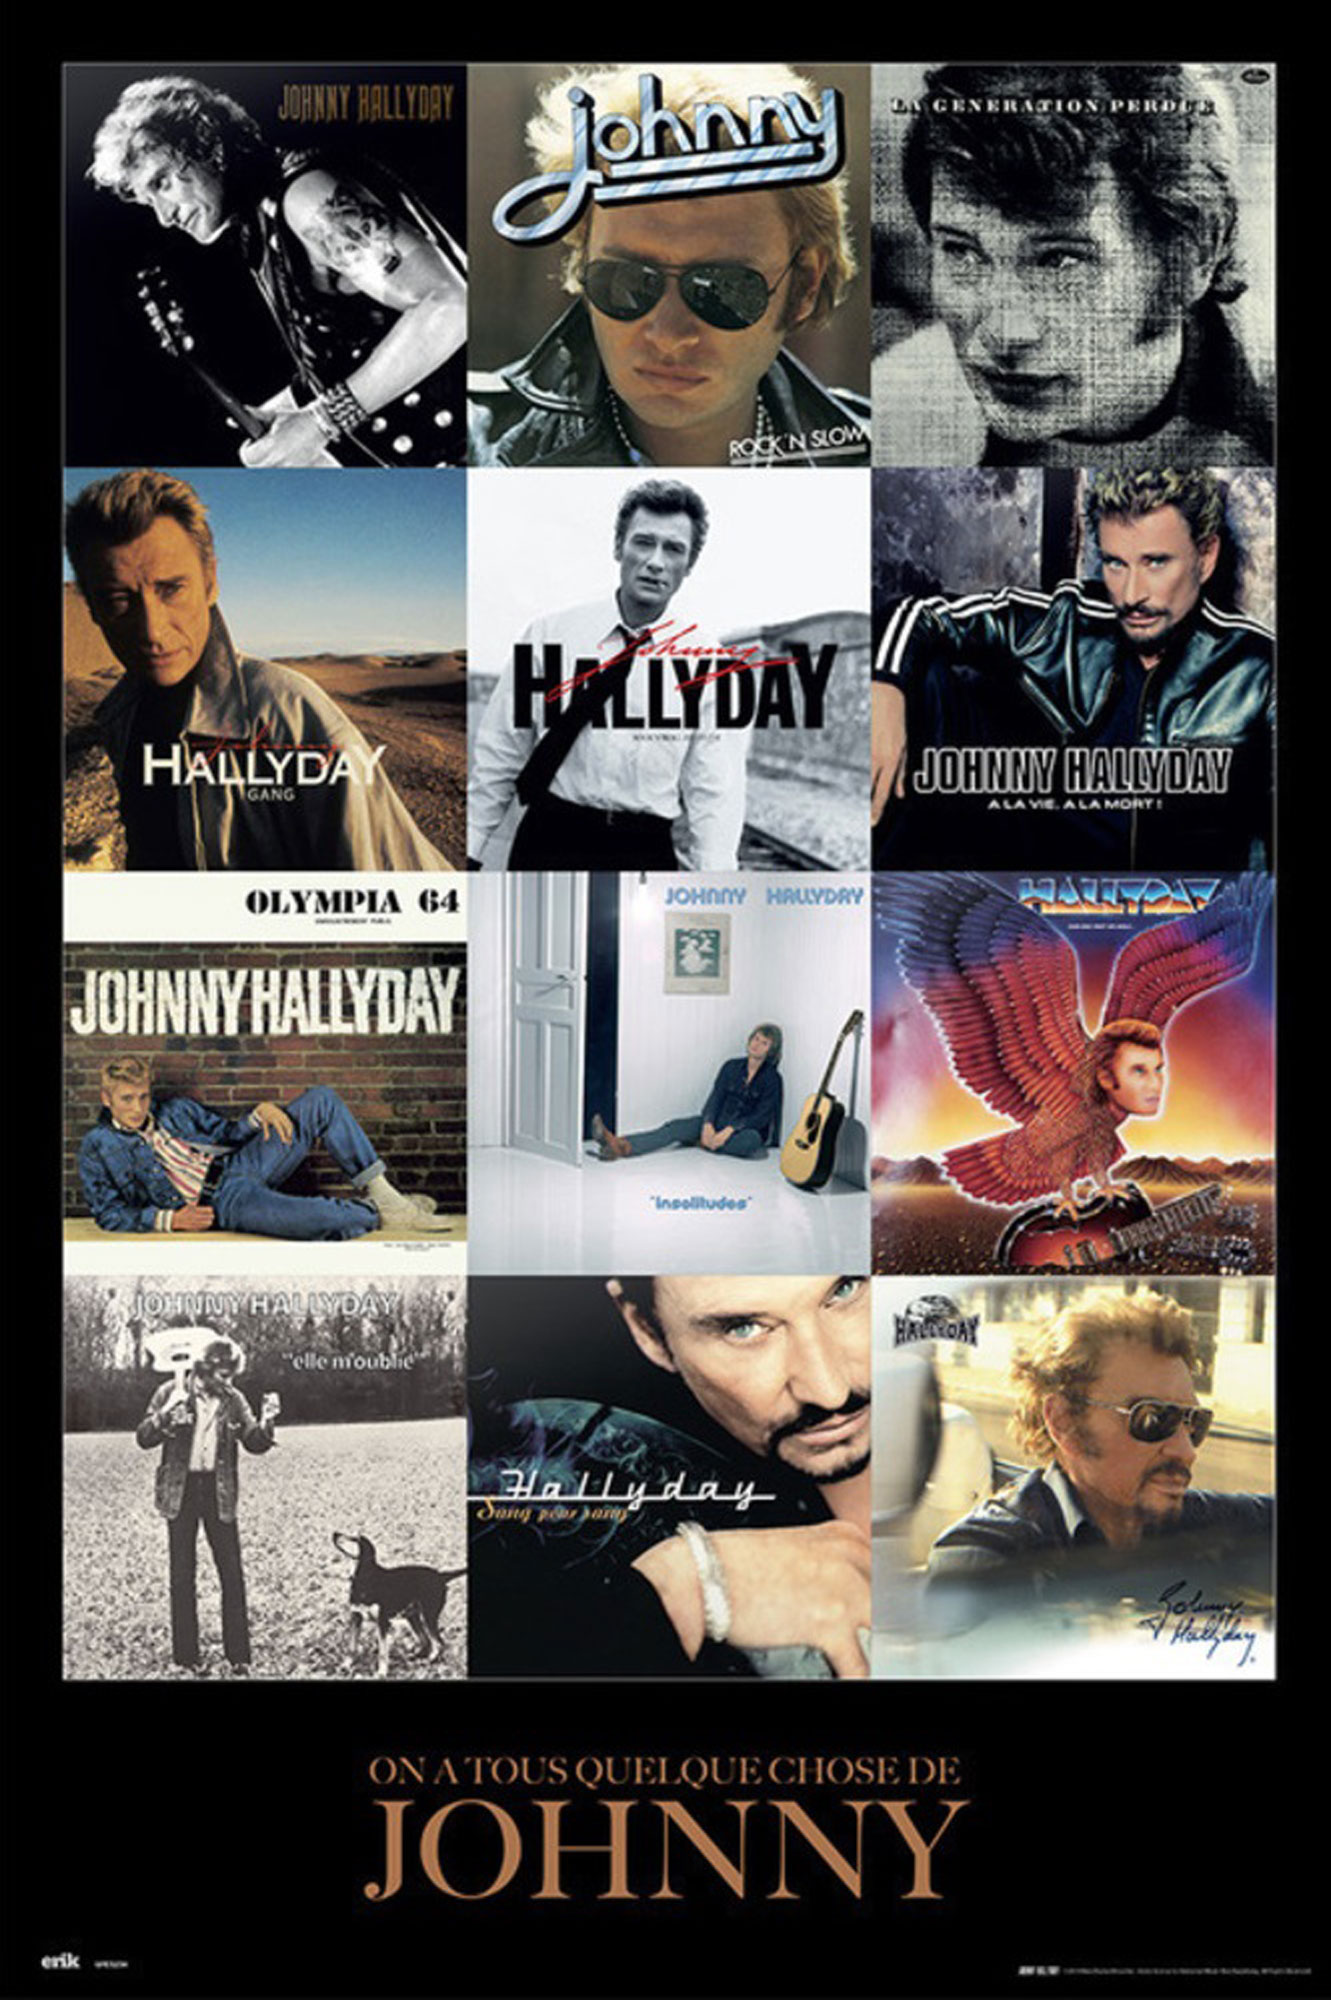 Covers - Hallyday, Johnny